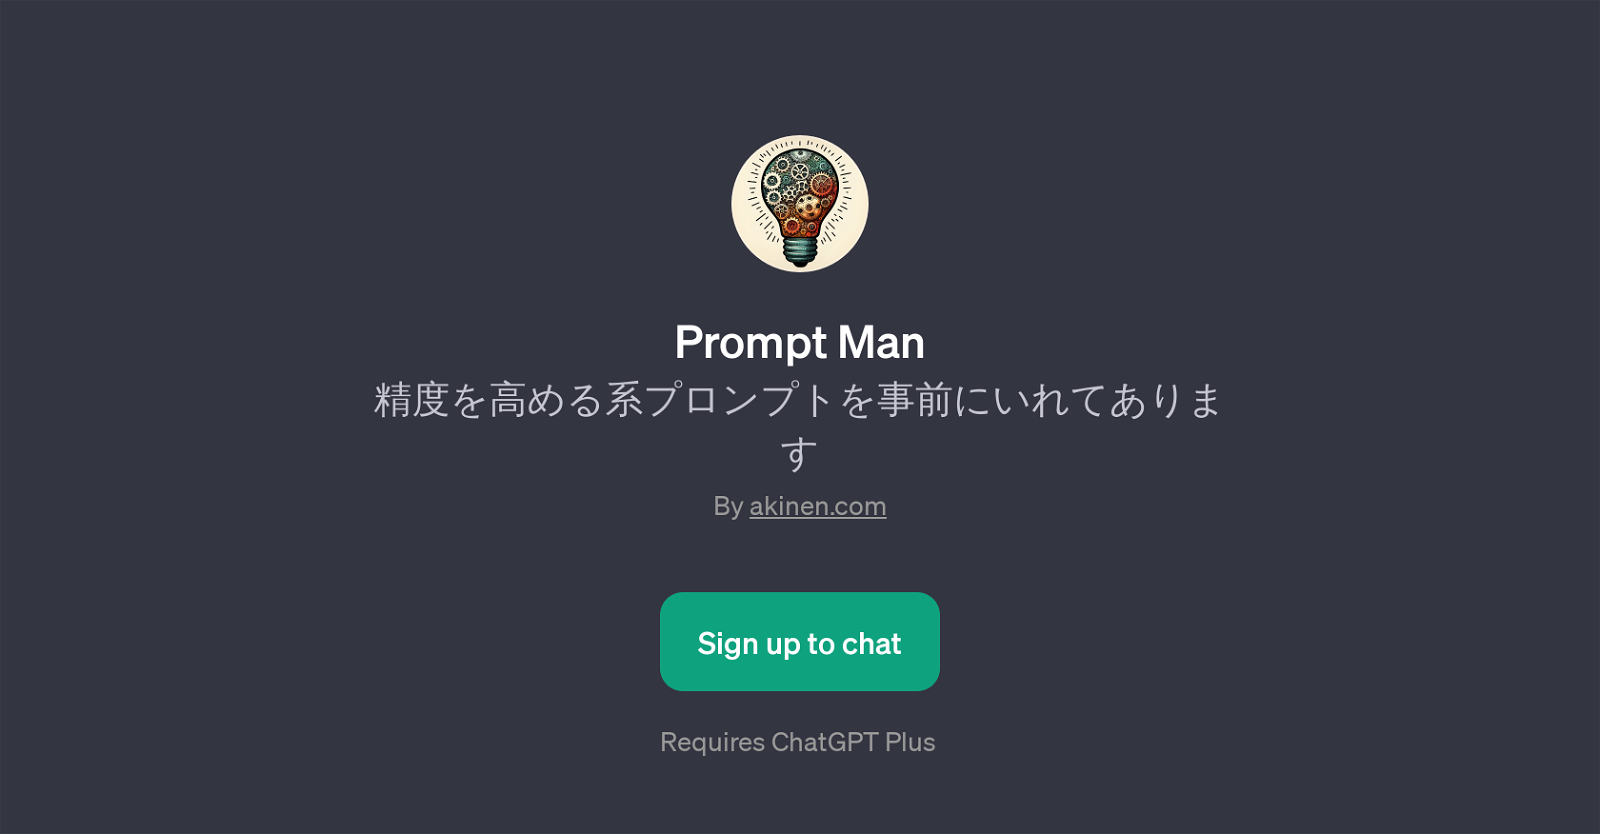 Prompt Man website